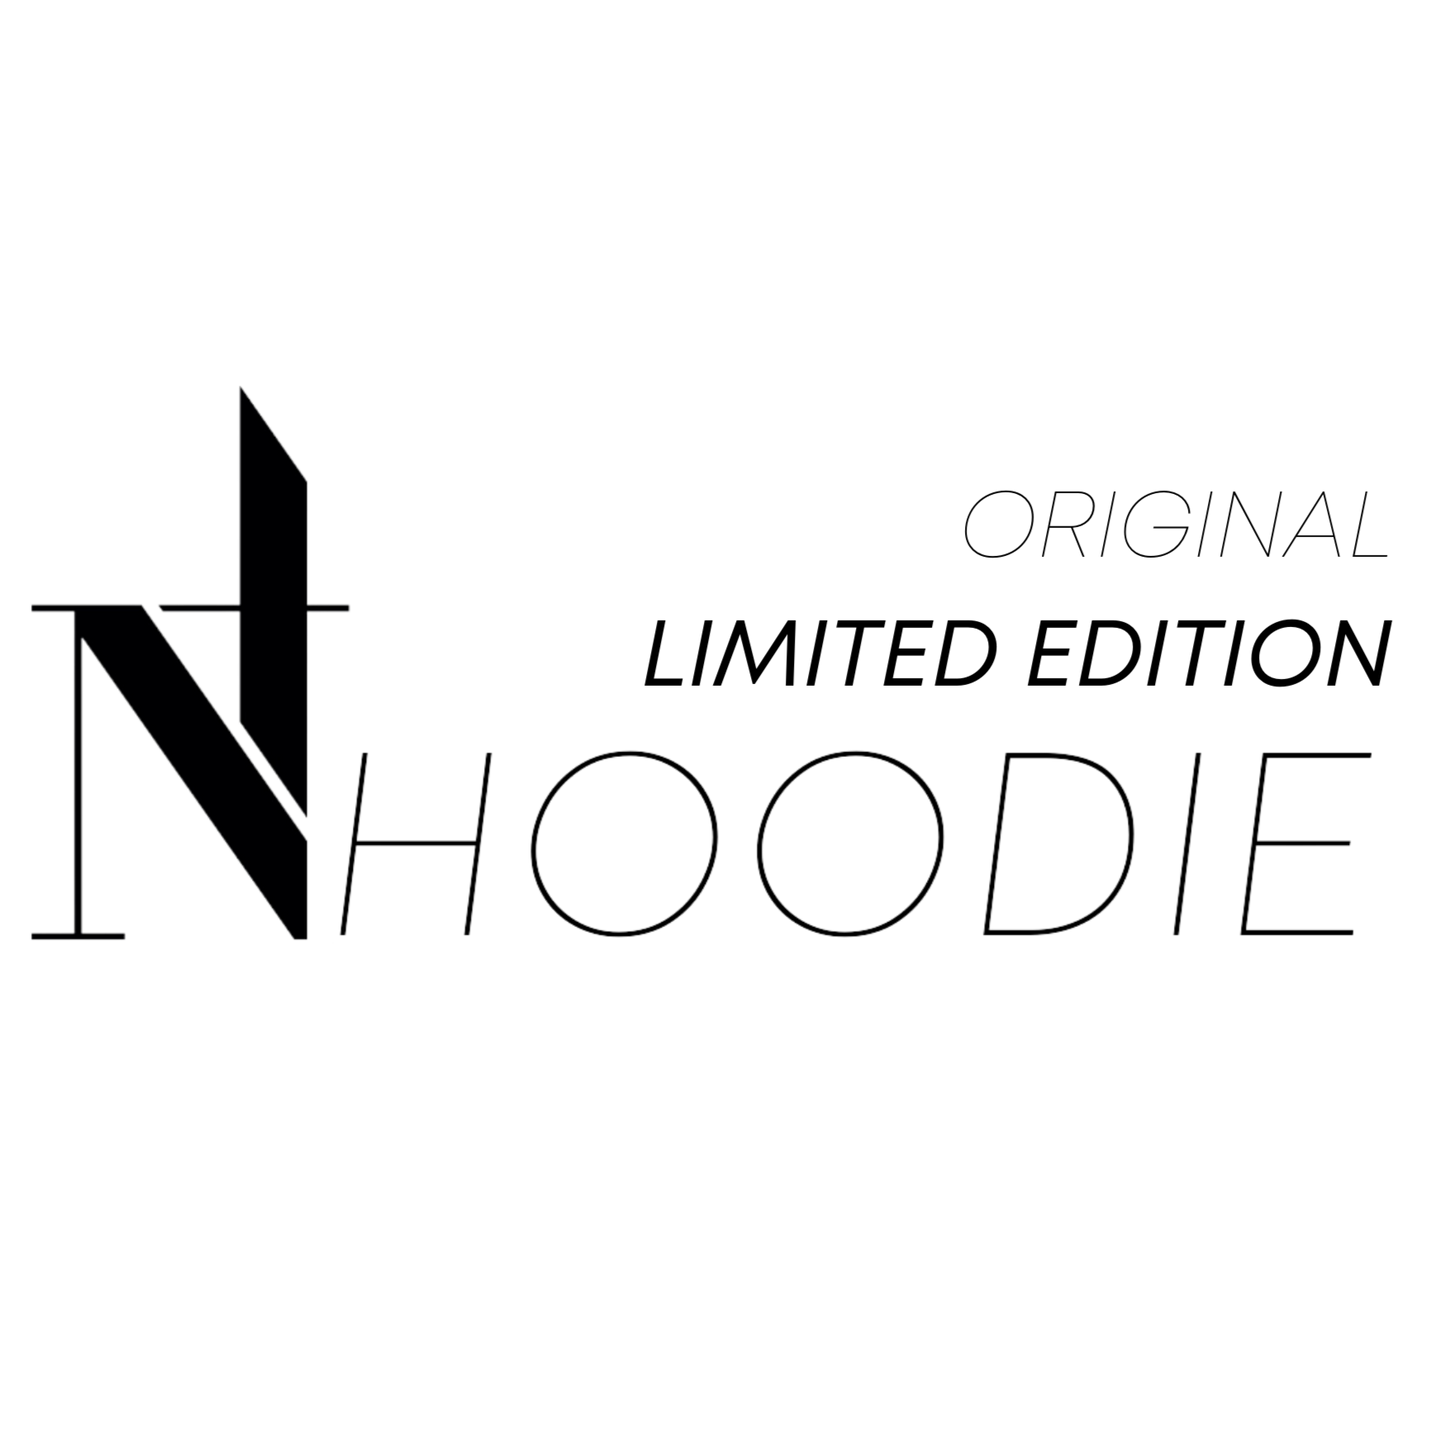 NT Hoodie ORIGINAL Limited Edition